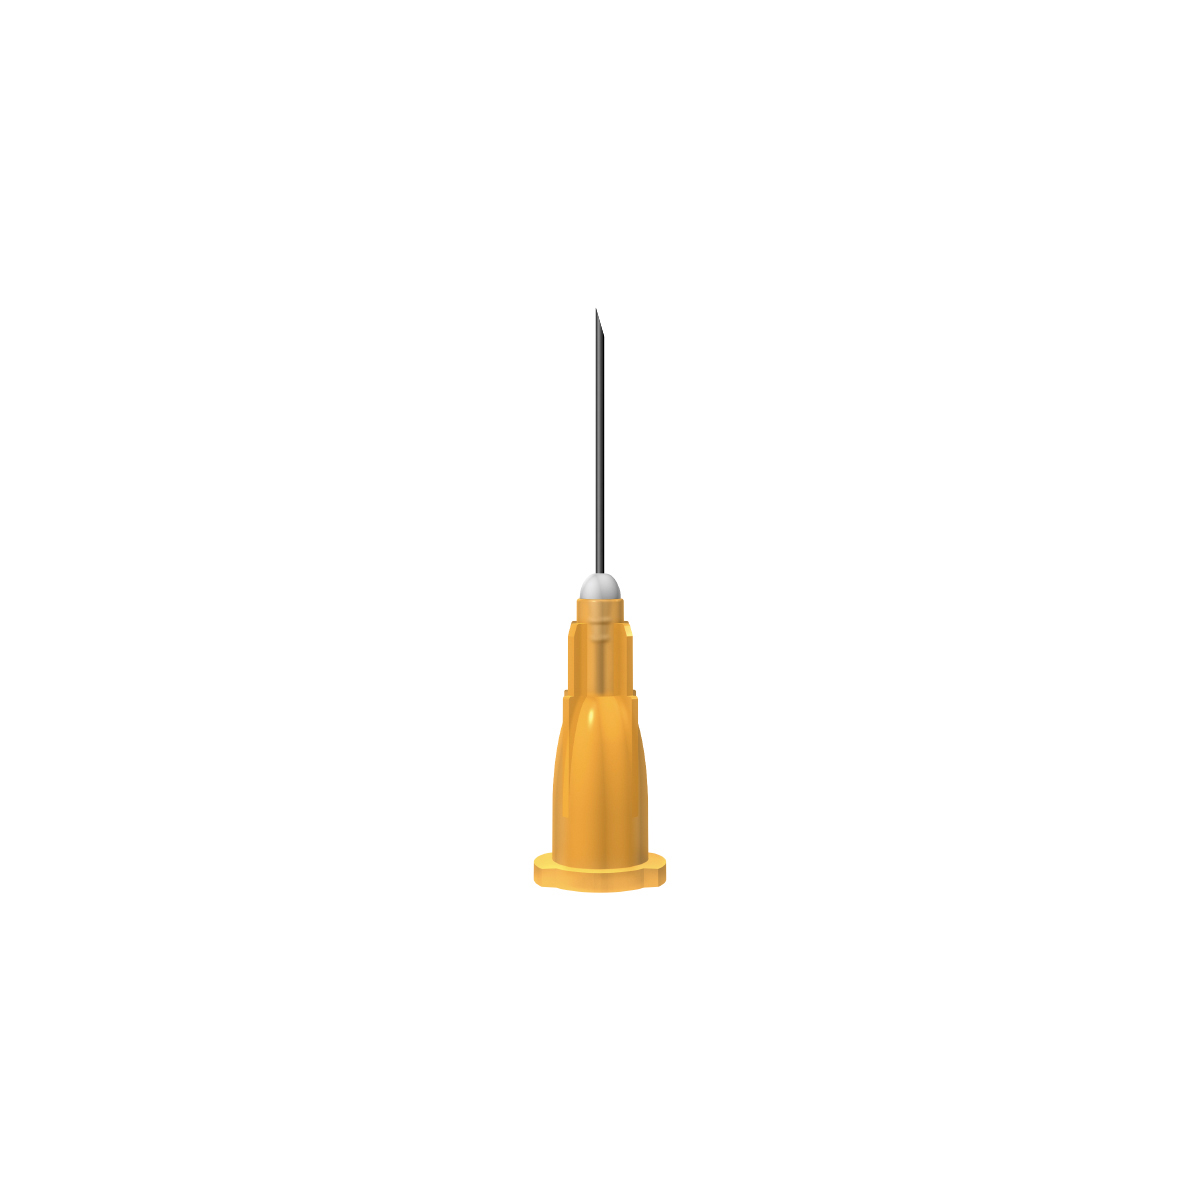 Unisharp: Orange 25G 16mm (⅝ inch) needle